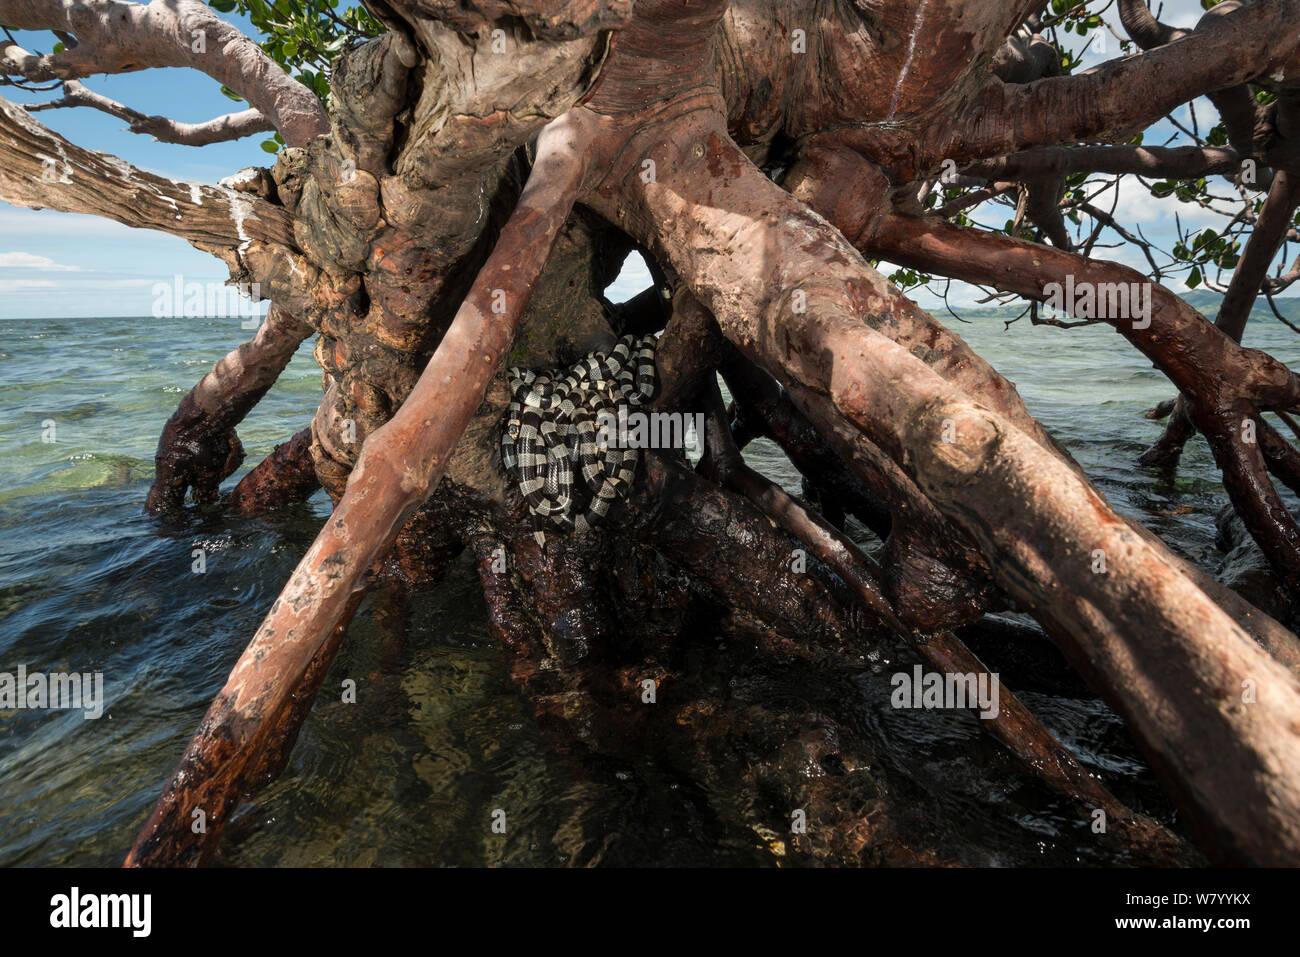 Gebänderte Meer kraits (Laticauda colubrina) Wurzeln der Mangrove Tree bei Ebbe, Mali Insel, Macuata Provinz, Fidschi, South Pacific. Stockfoto